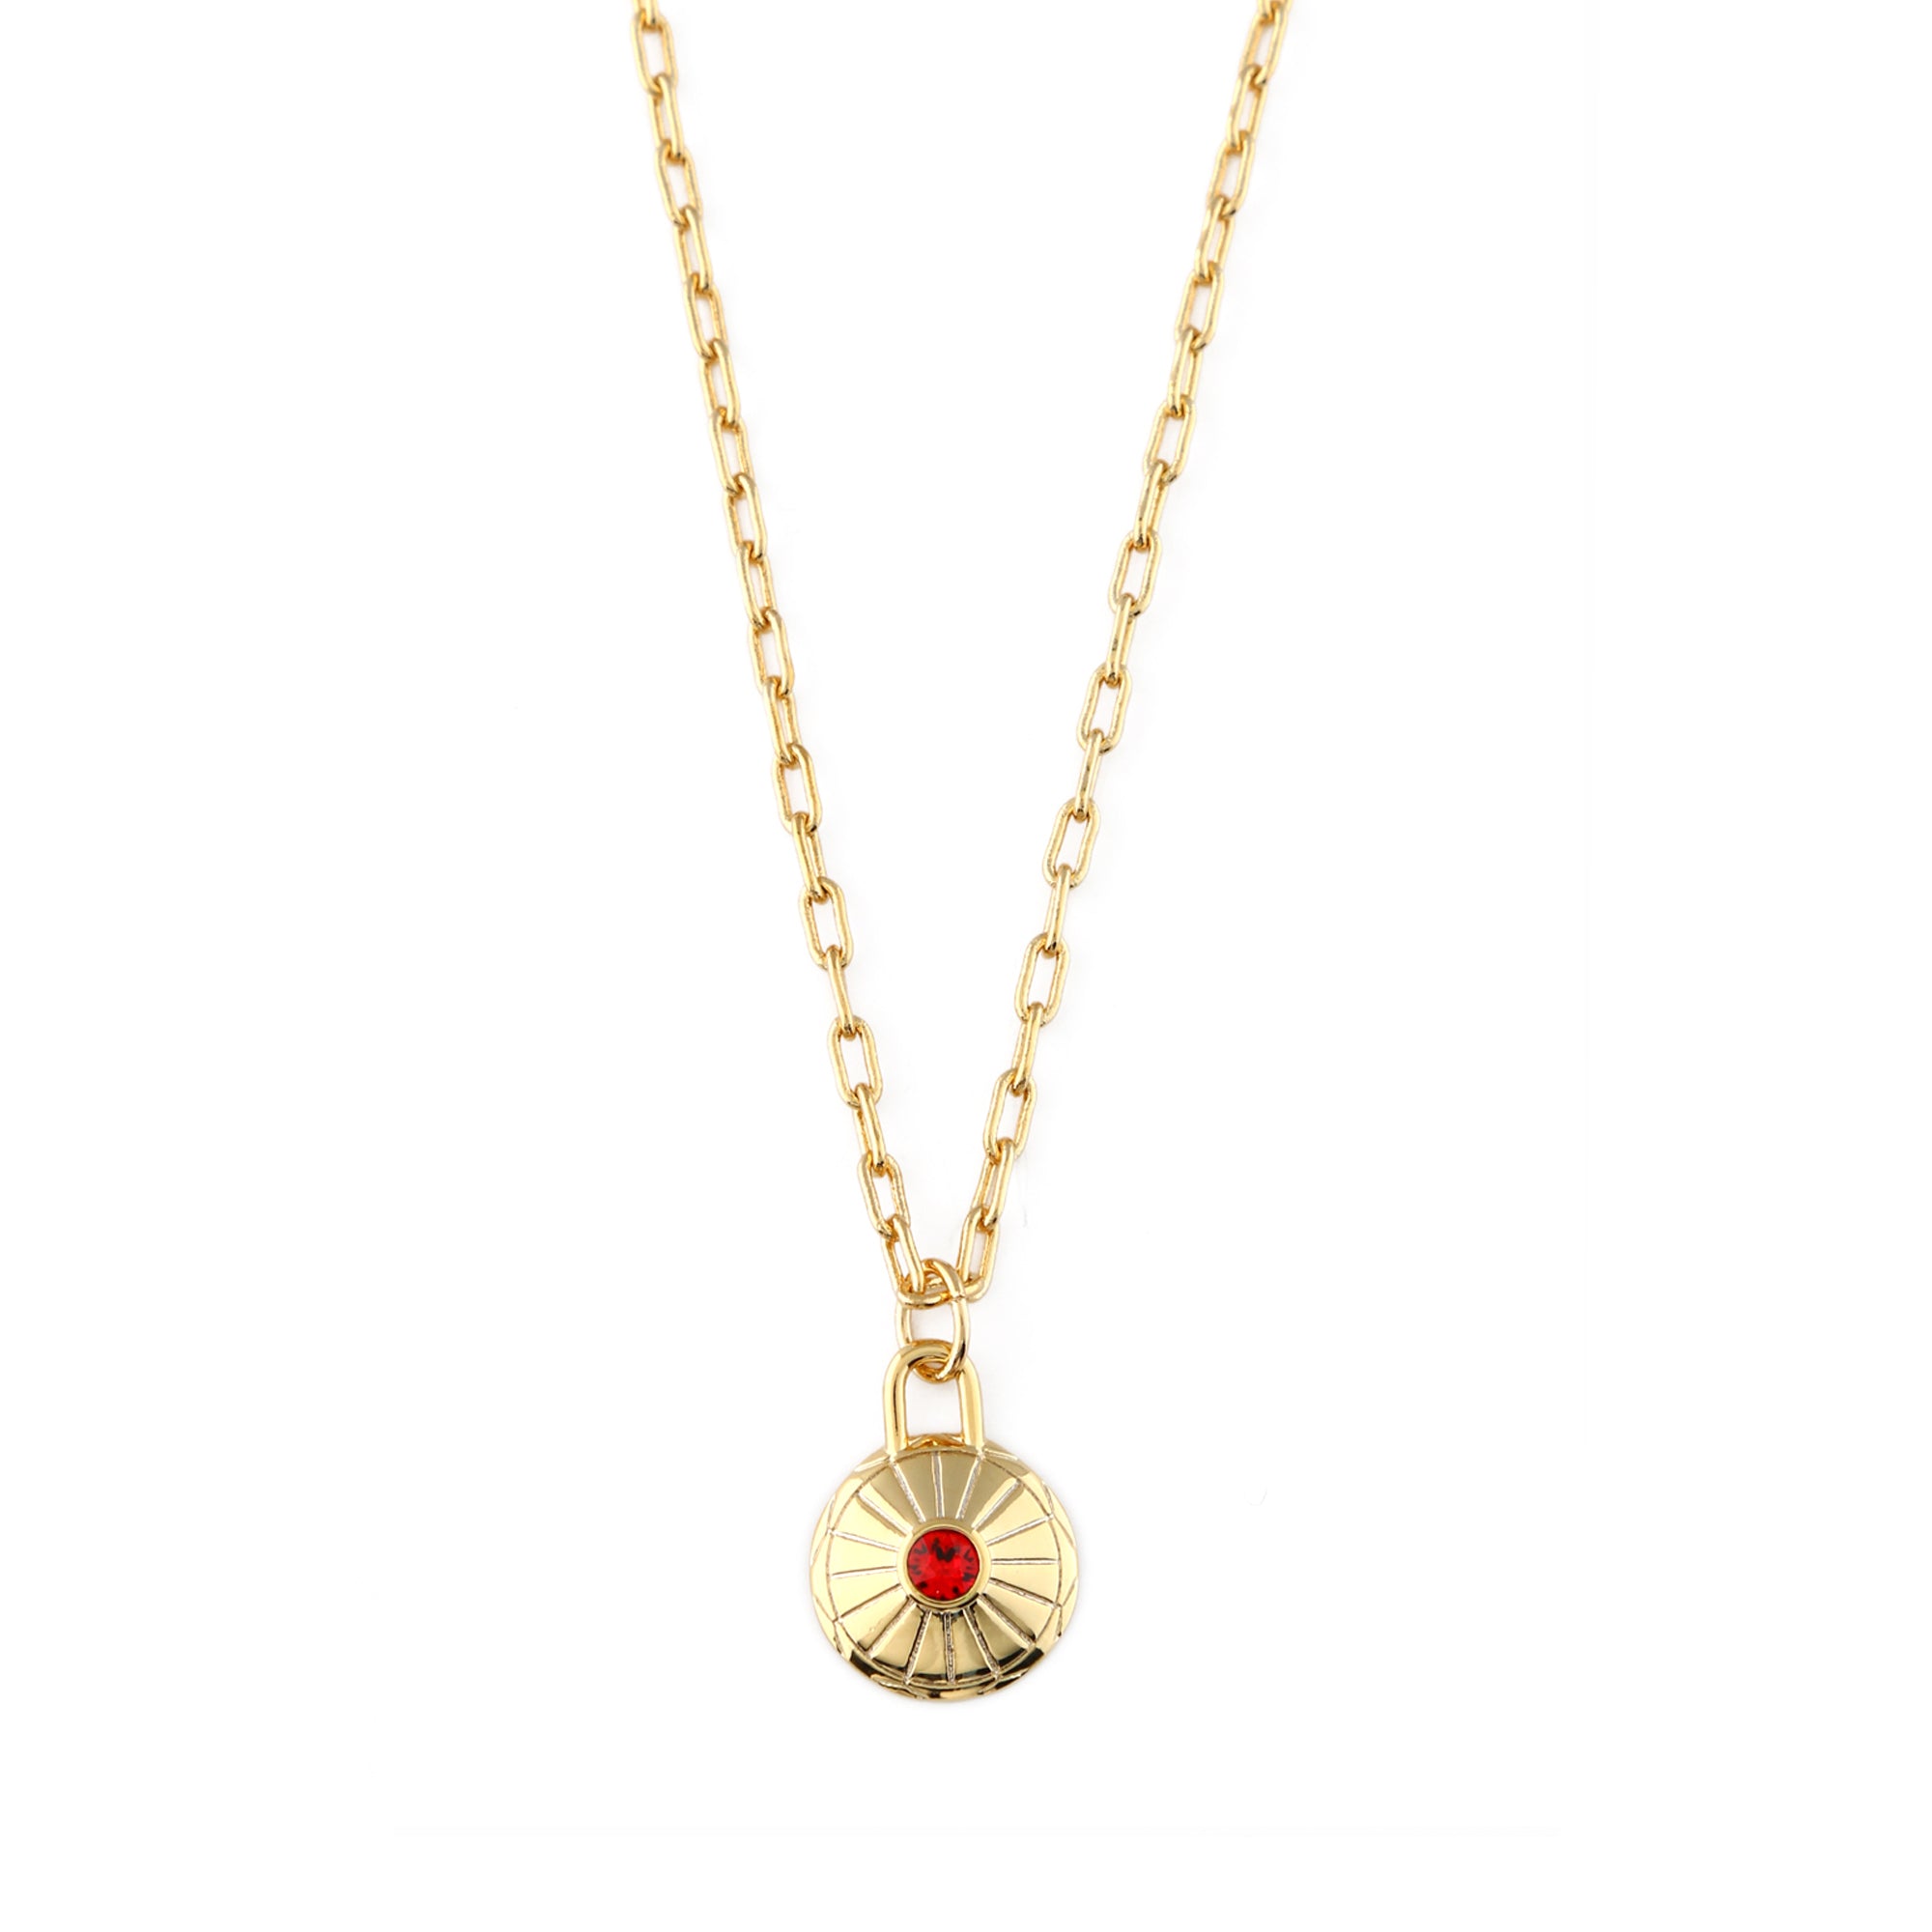 July Birthstone Necklace Made With Swarovski Crystals - Gold - Orelia London